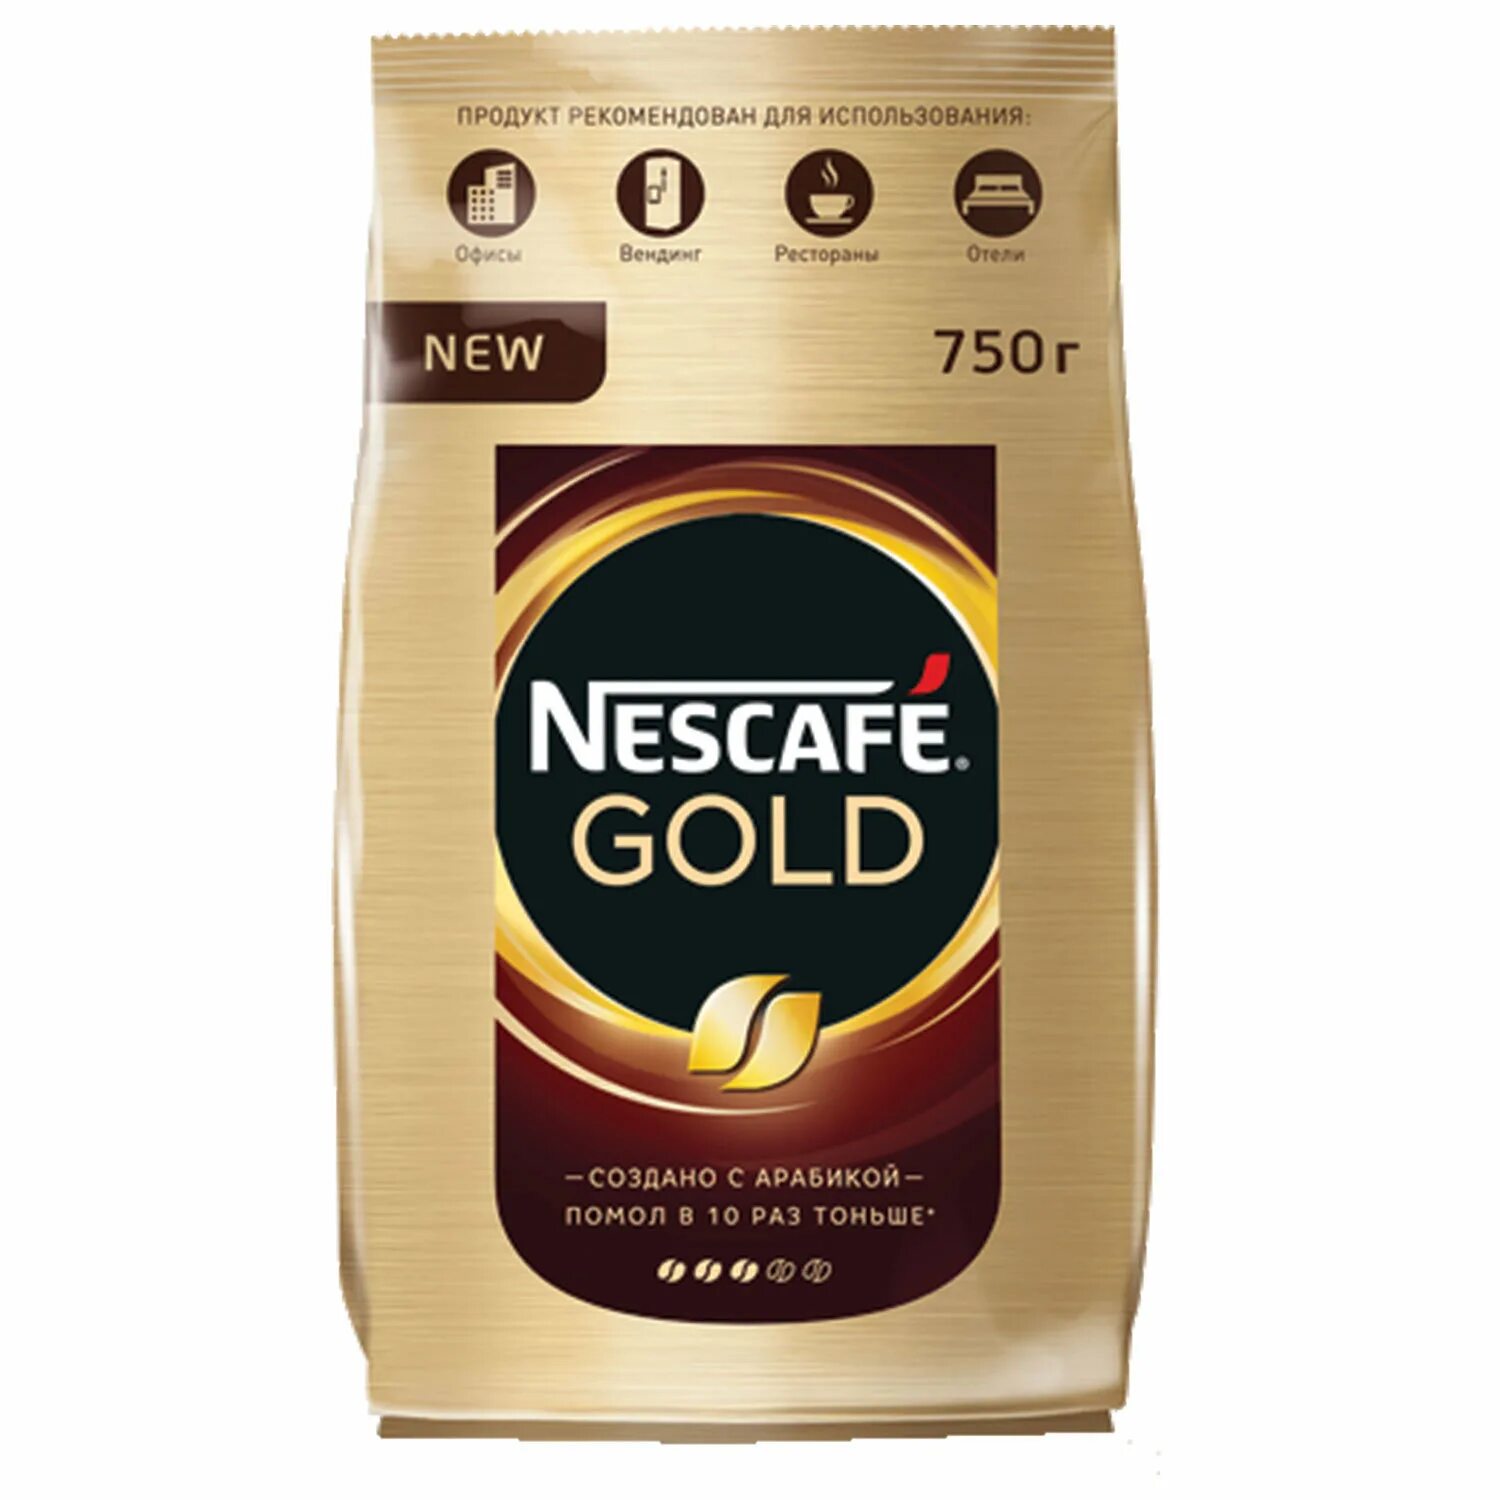 Nescafe кофе Gold 900г.. Кофе Нескафе Голд 900 гр. Nescafe Gold 750 гр. Кофе "Nescafe Gold", 750 гр.. Кофе растворимый nescafe gold 900